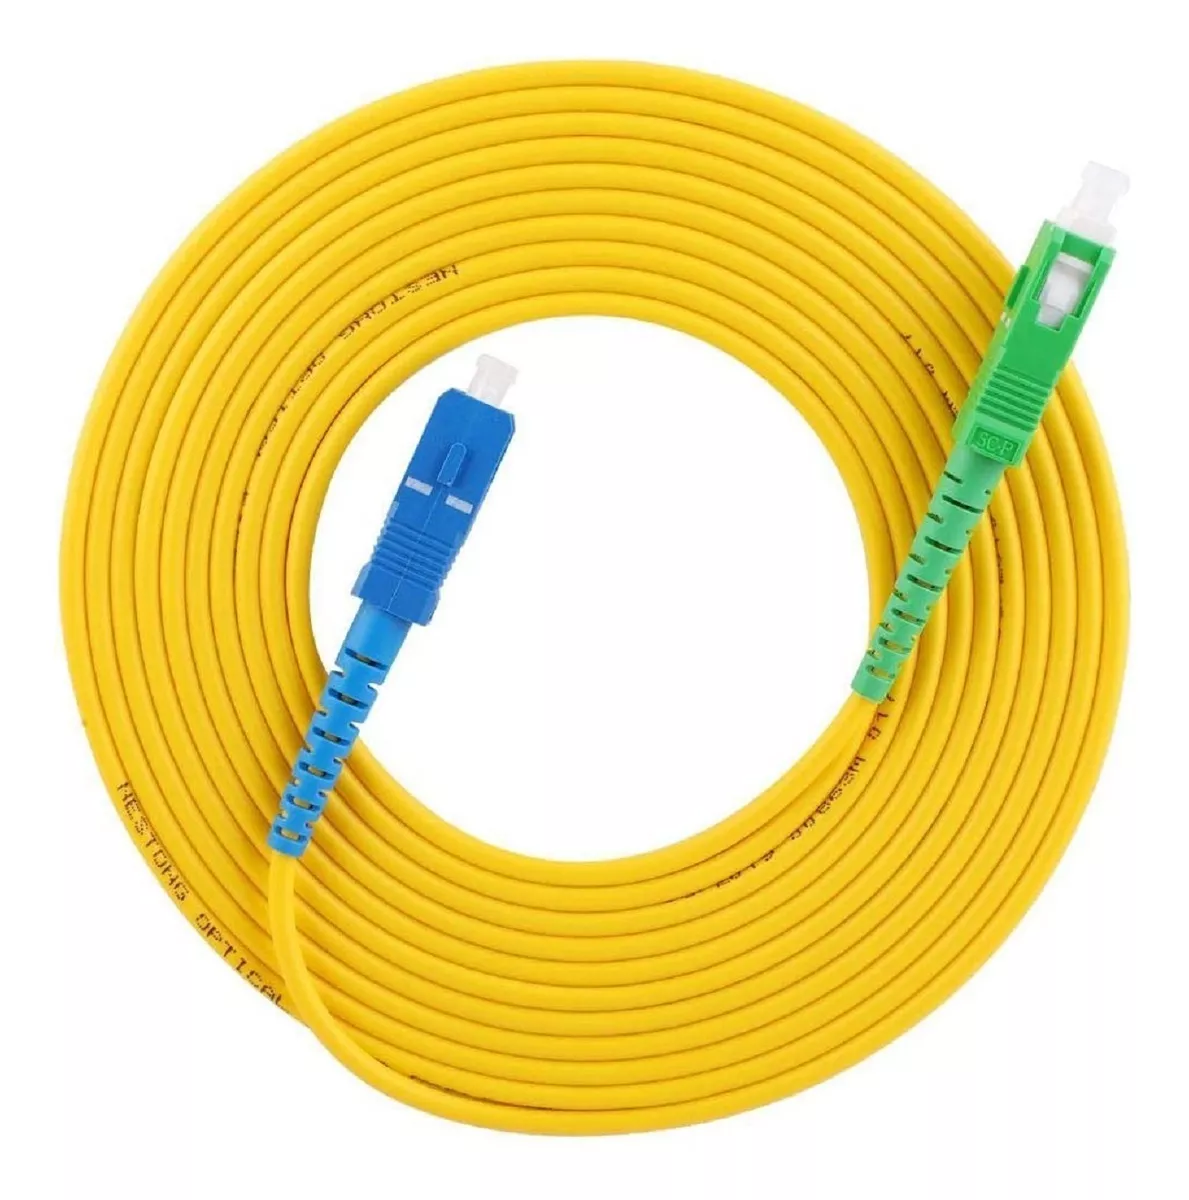 Tercera imagen para búsqueda de cable de red para conectar del pc al modem